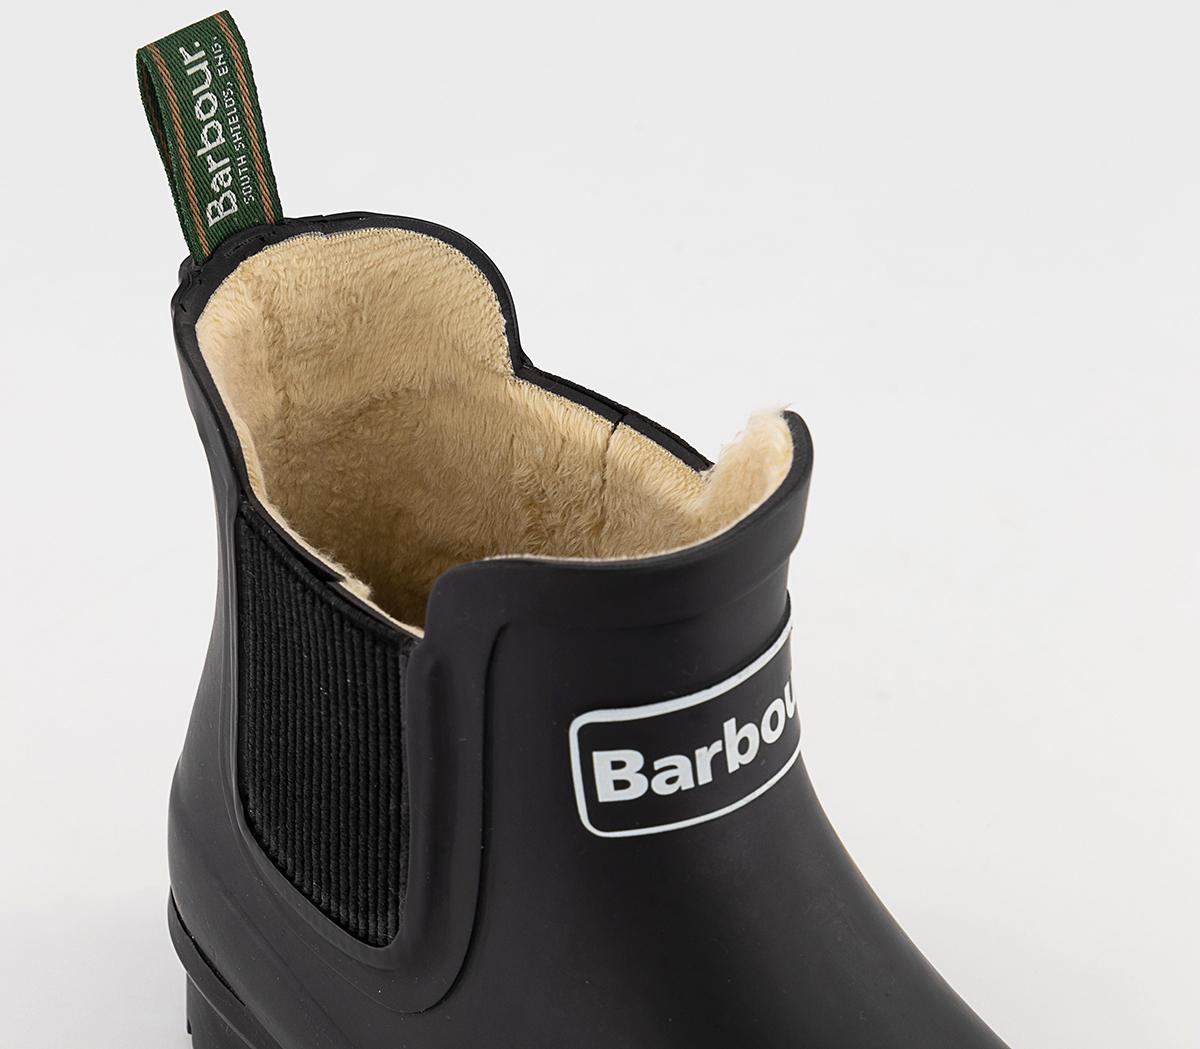 Barbour Speyside Faux Fur Lined Rainboots Black - Women's Ankle Boots